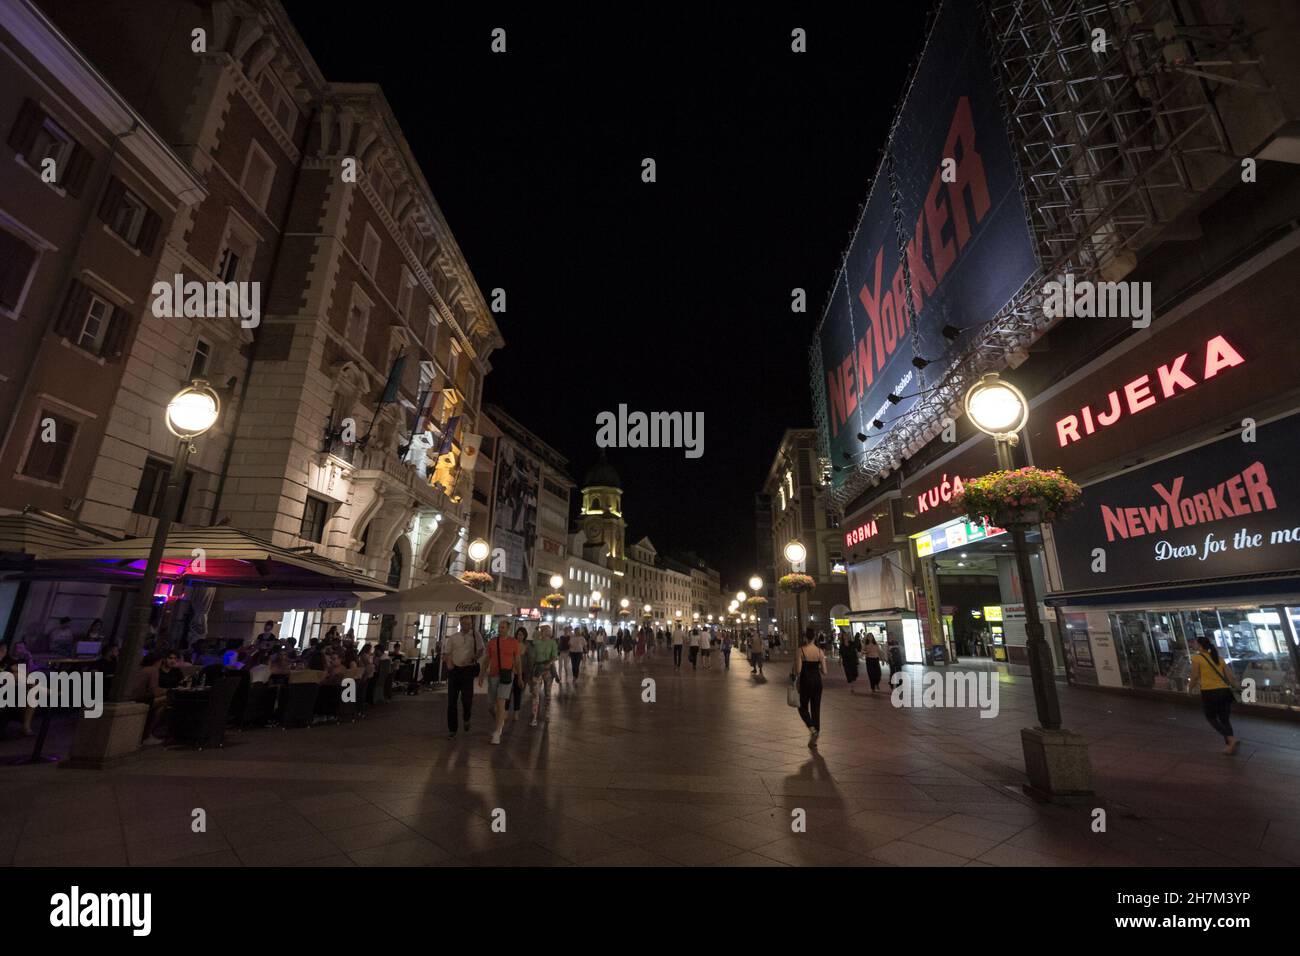 Picture of Rijeka at night with crowds passing by the street of Korzo, the main pedestrain way of Rijeka, croatia. Stock Photo